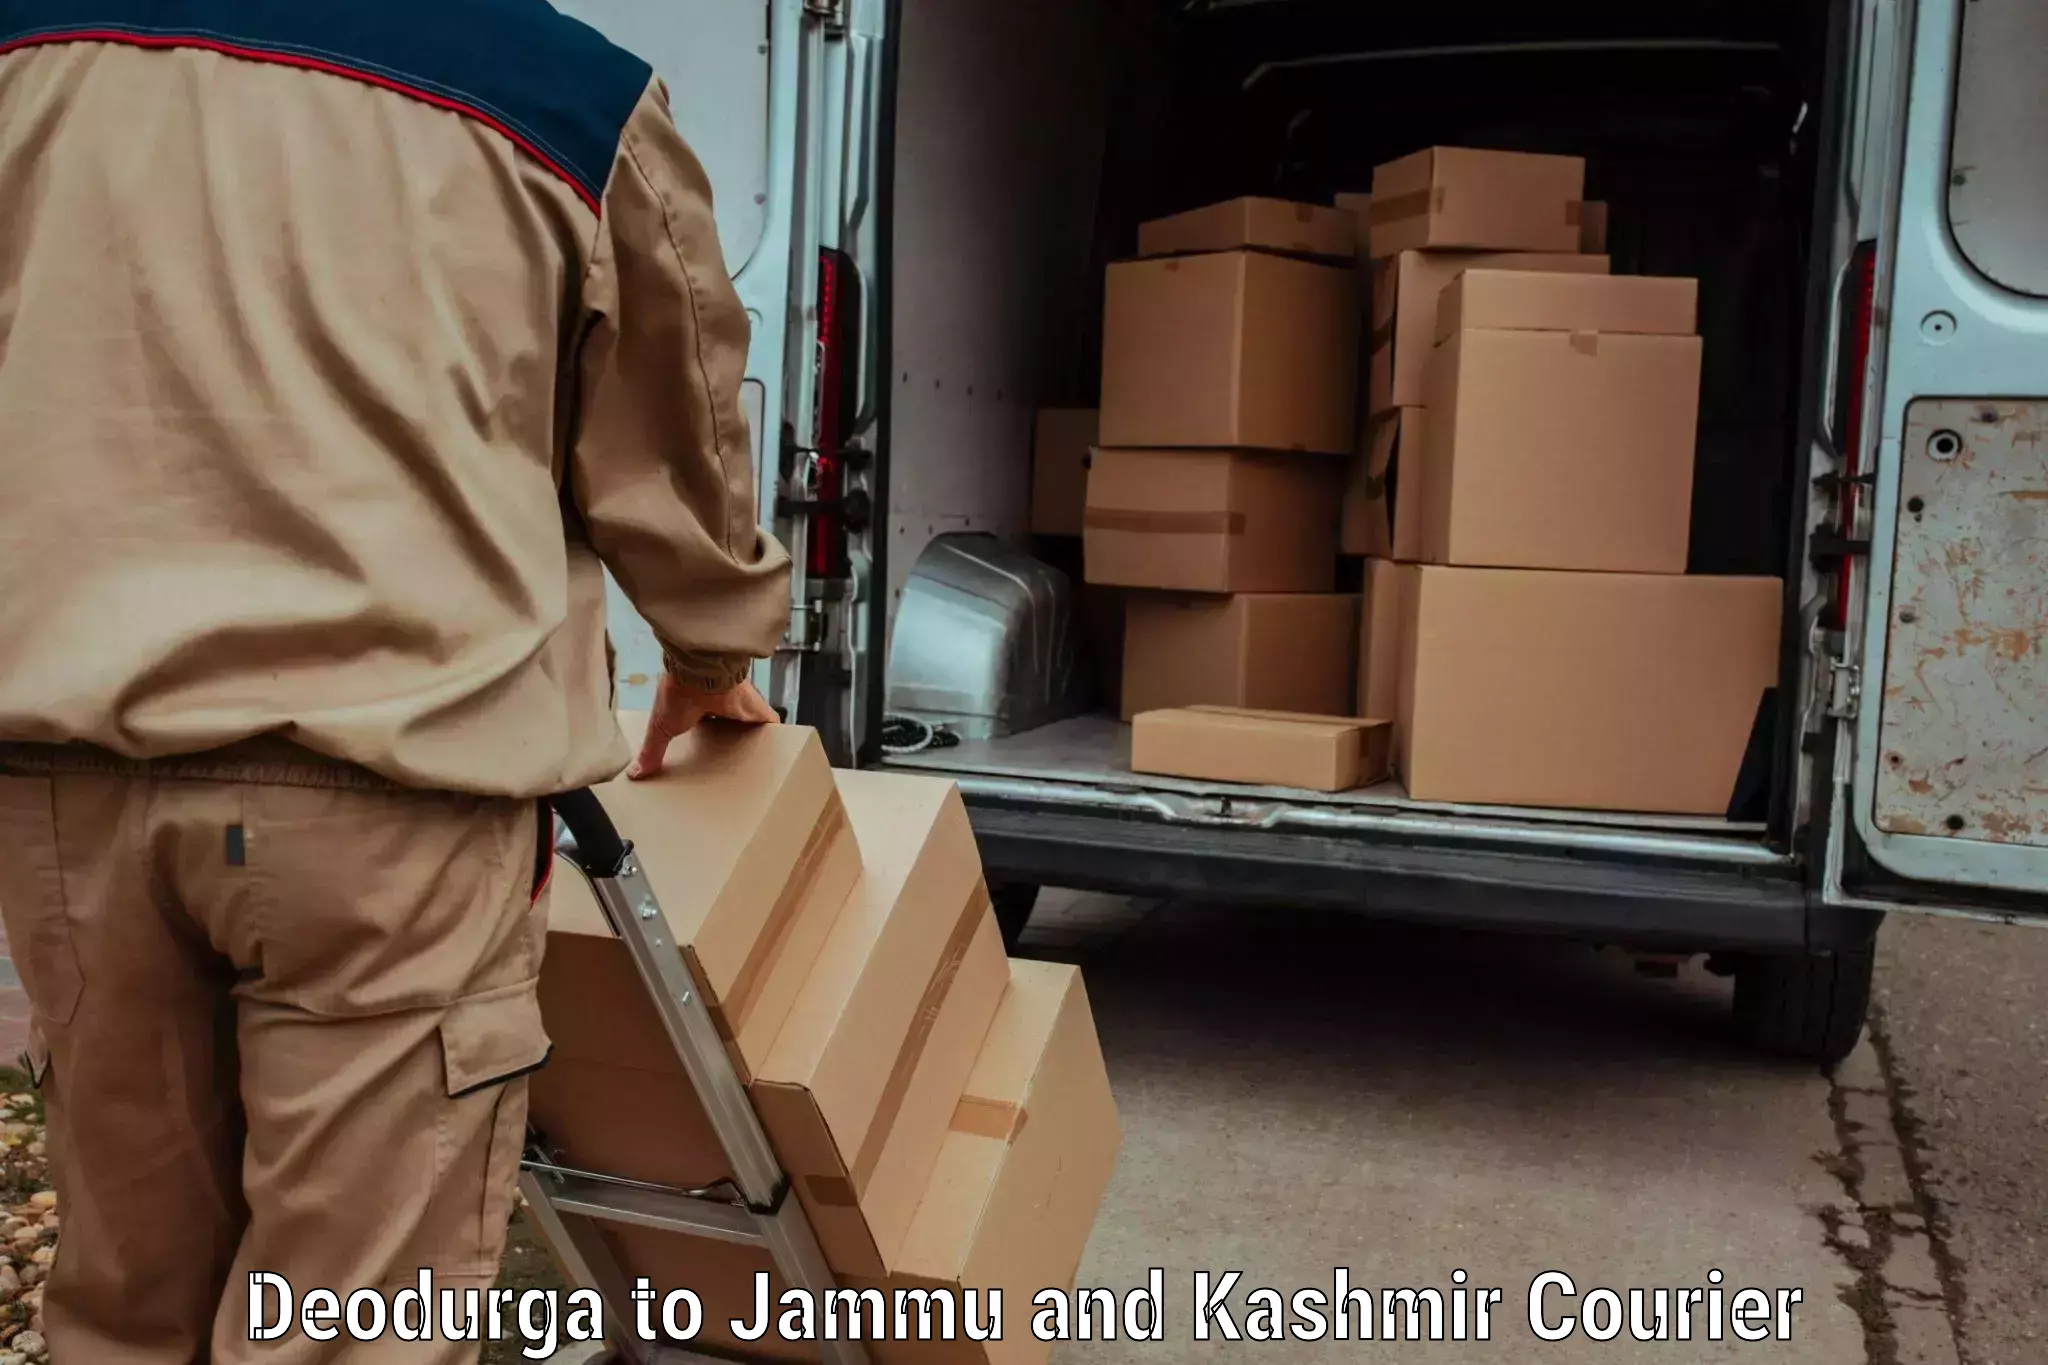 Reliable courier service Deodurga to Leh